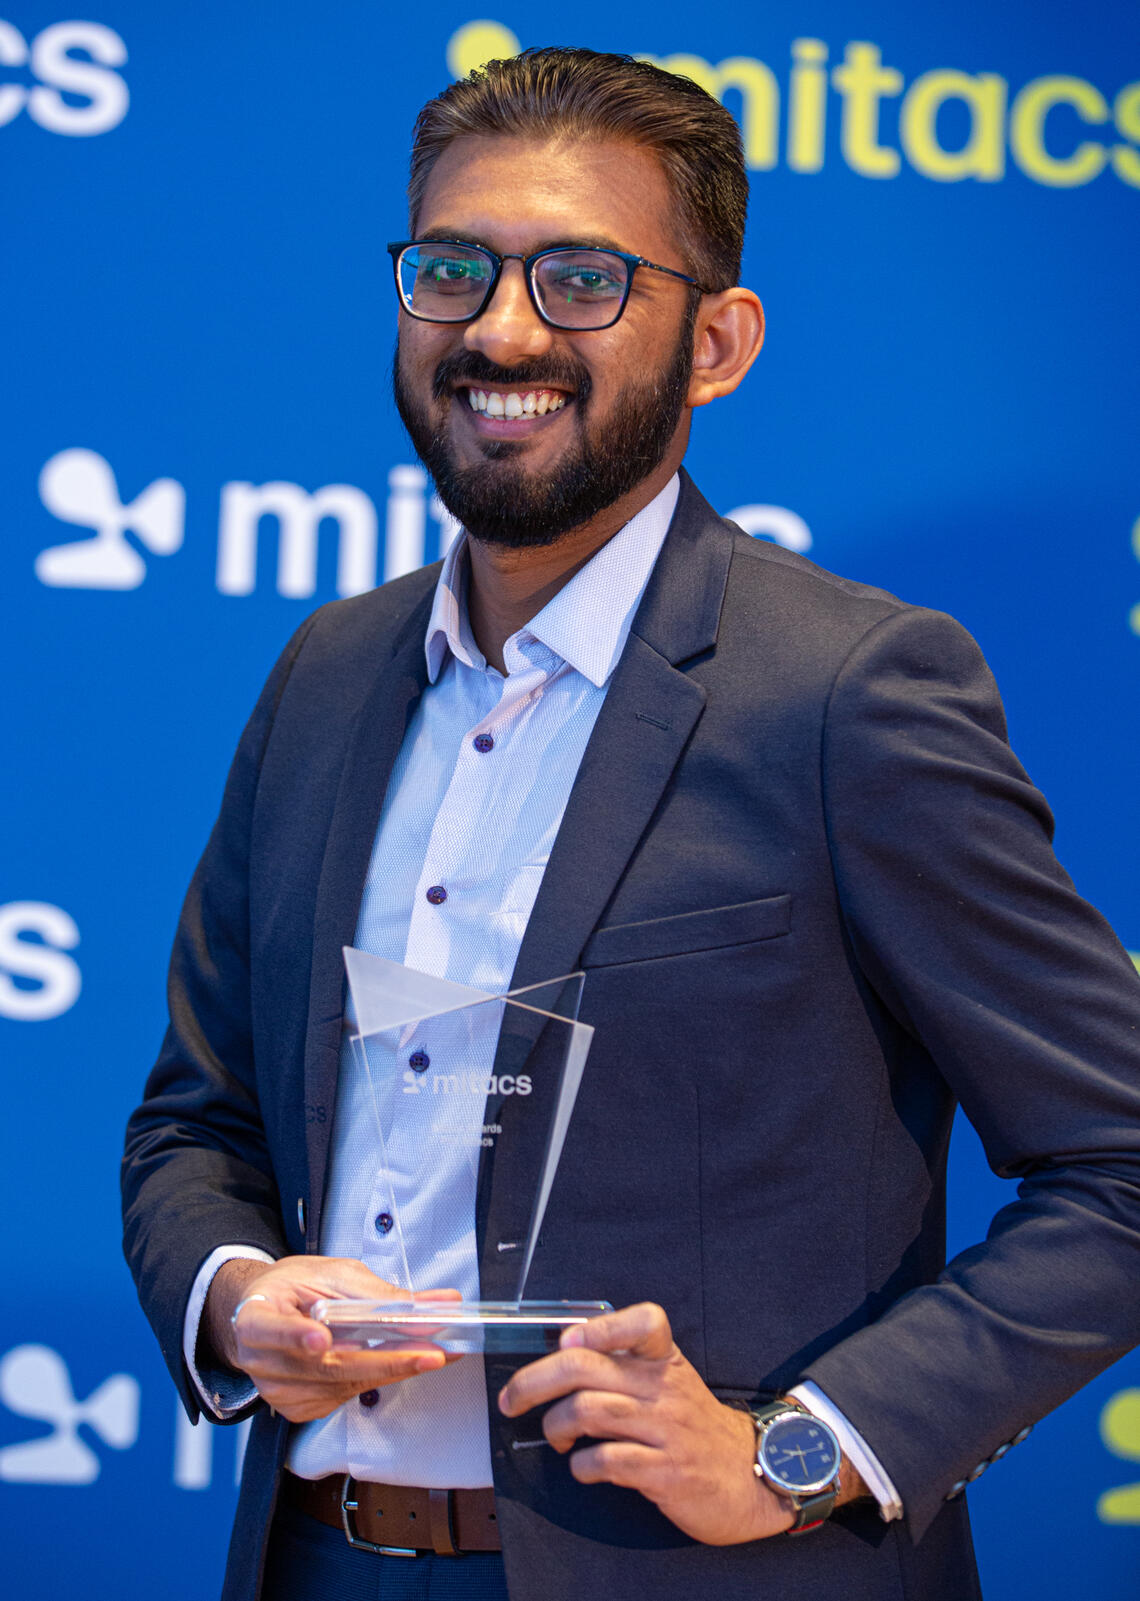 Ketul Patel poses with his Mitacs Award 